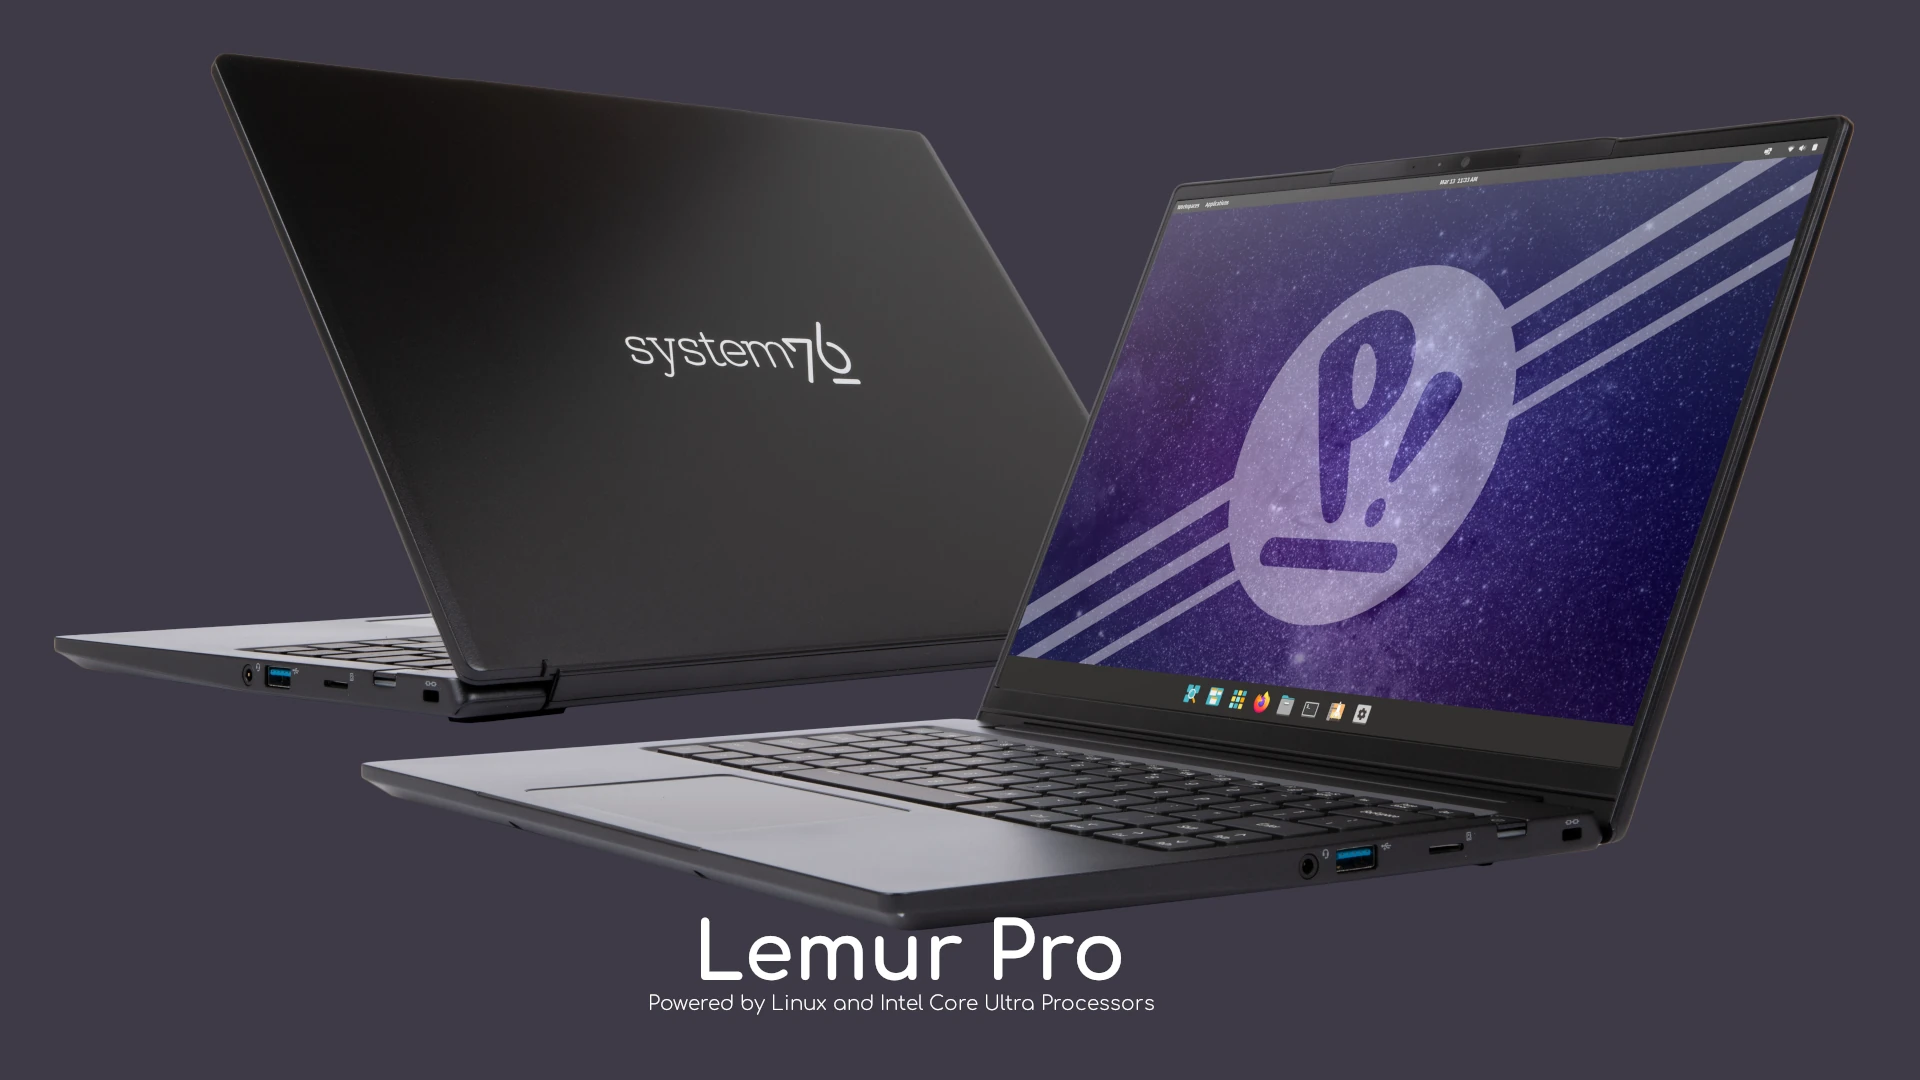 System76 Unveils New Lemur Pro Linux Laptop with Intel Core Ultra Processors